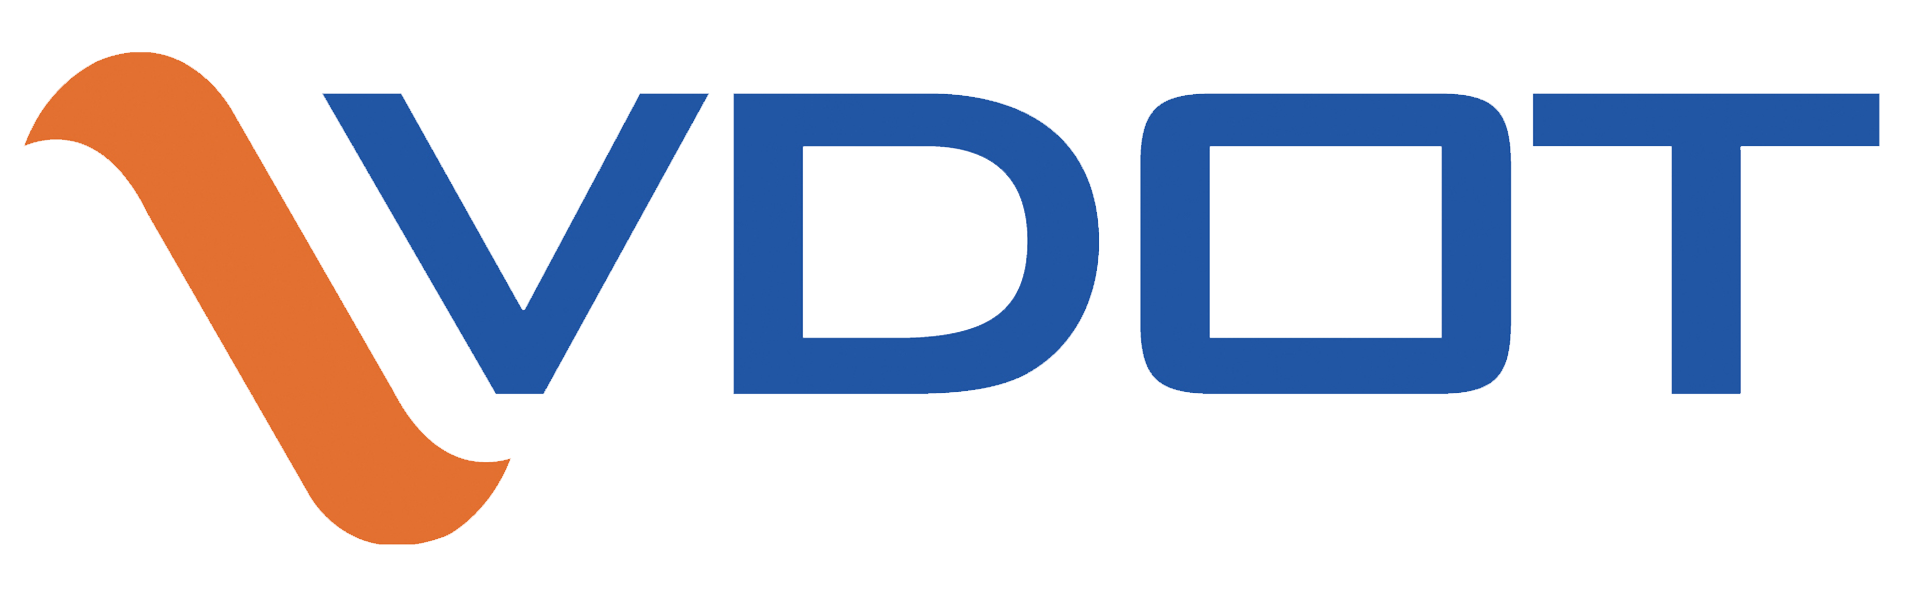 VDOT_Logo_Transparent.png